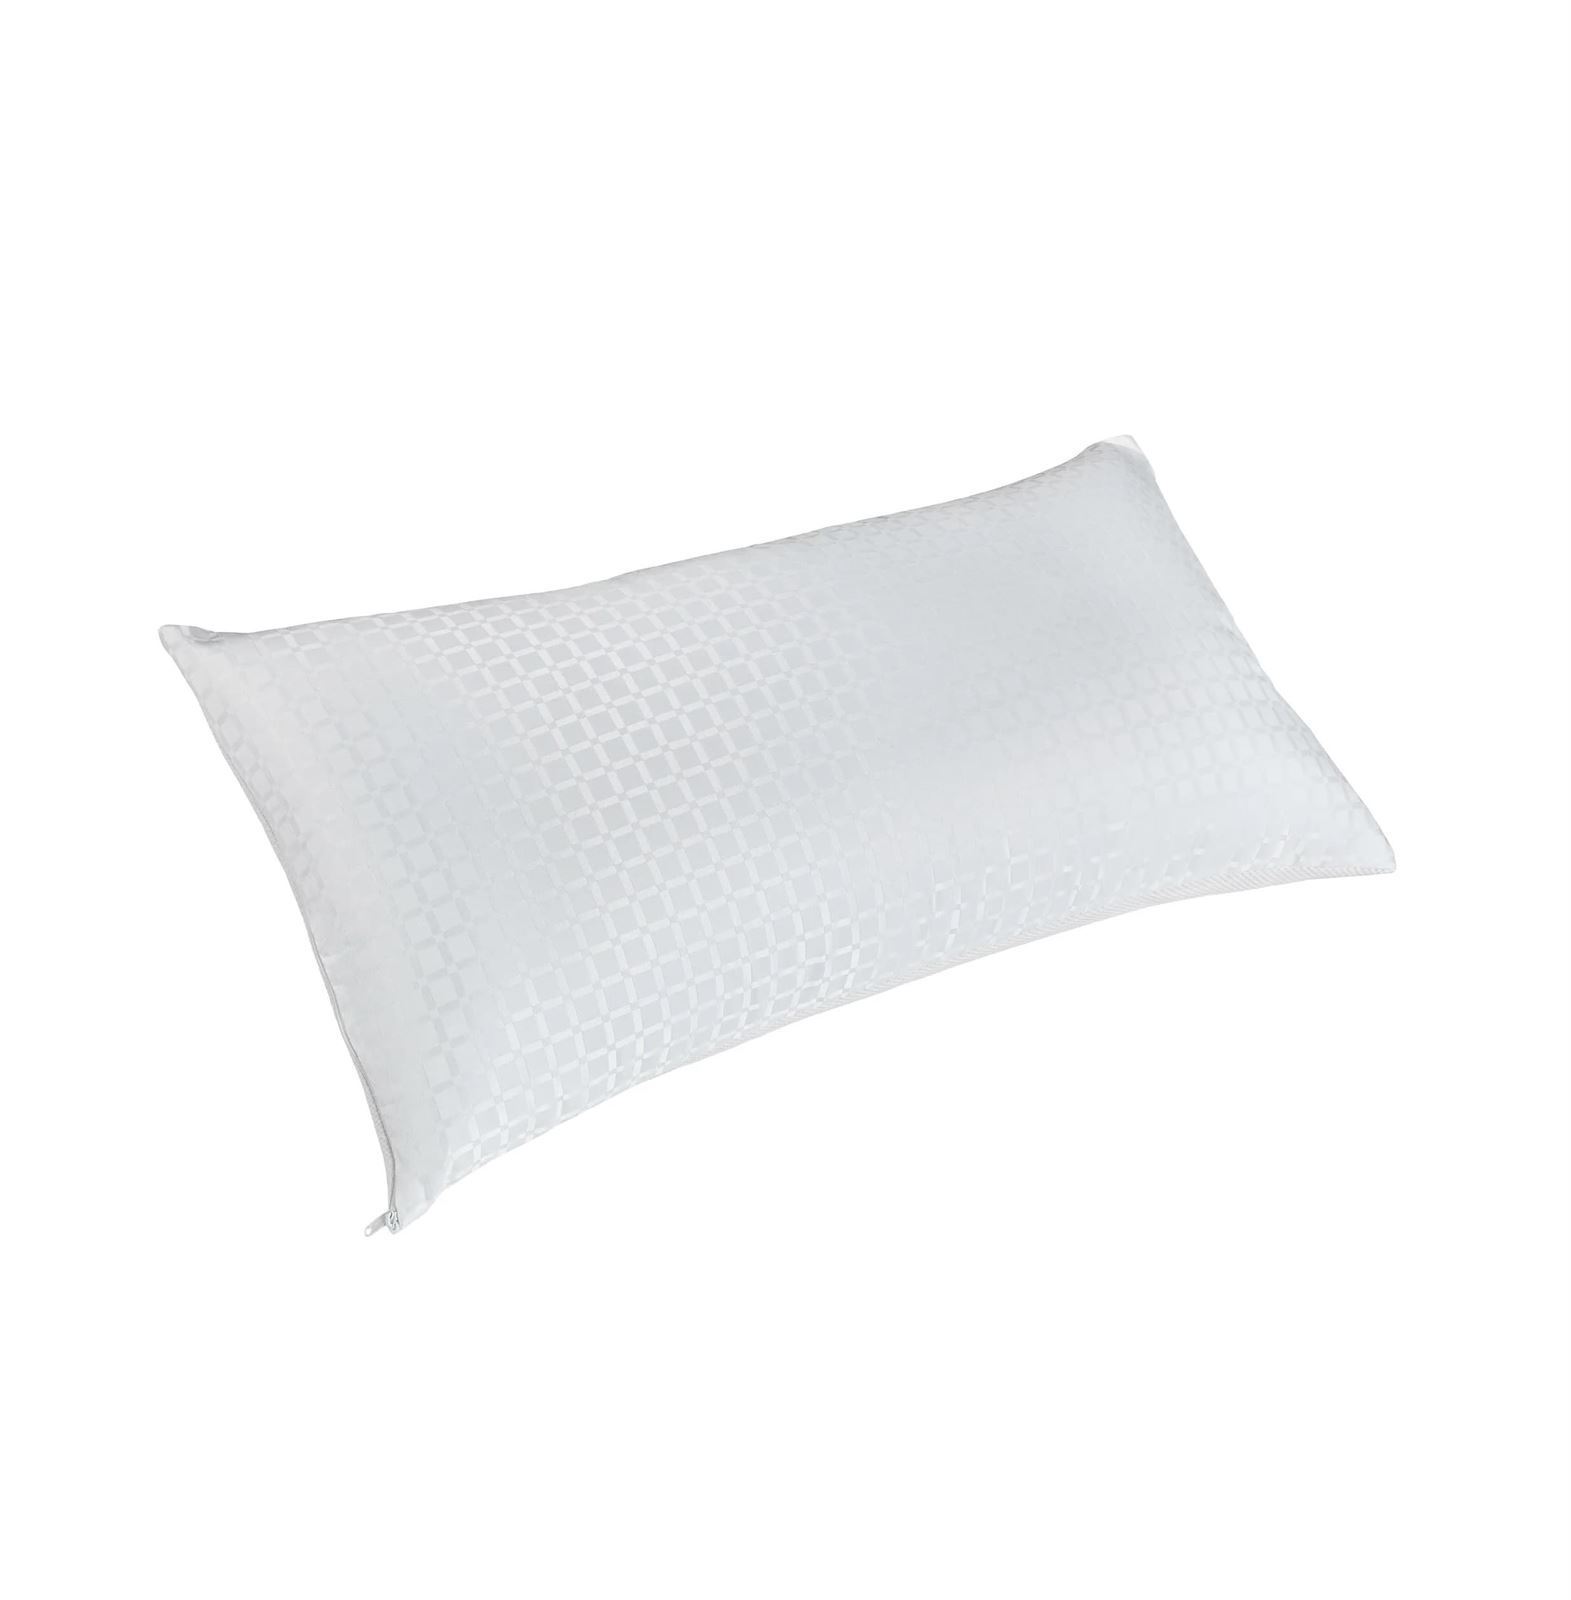 Almohada para dormir boca arriba de fibra y firmeza media-alta - IRON - Imagen 1